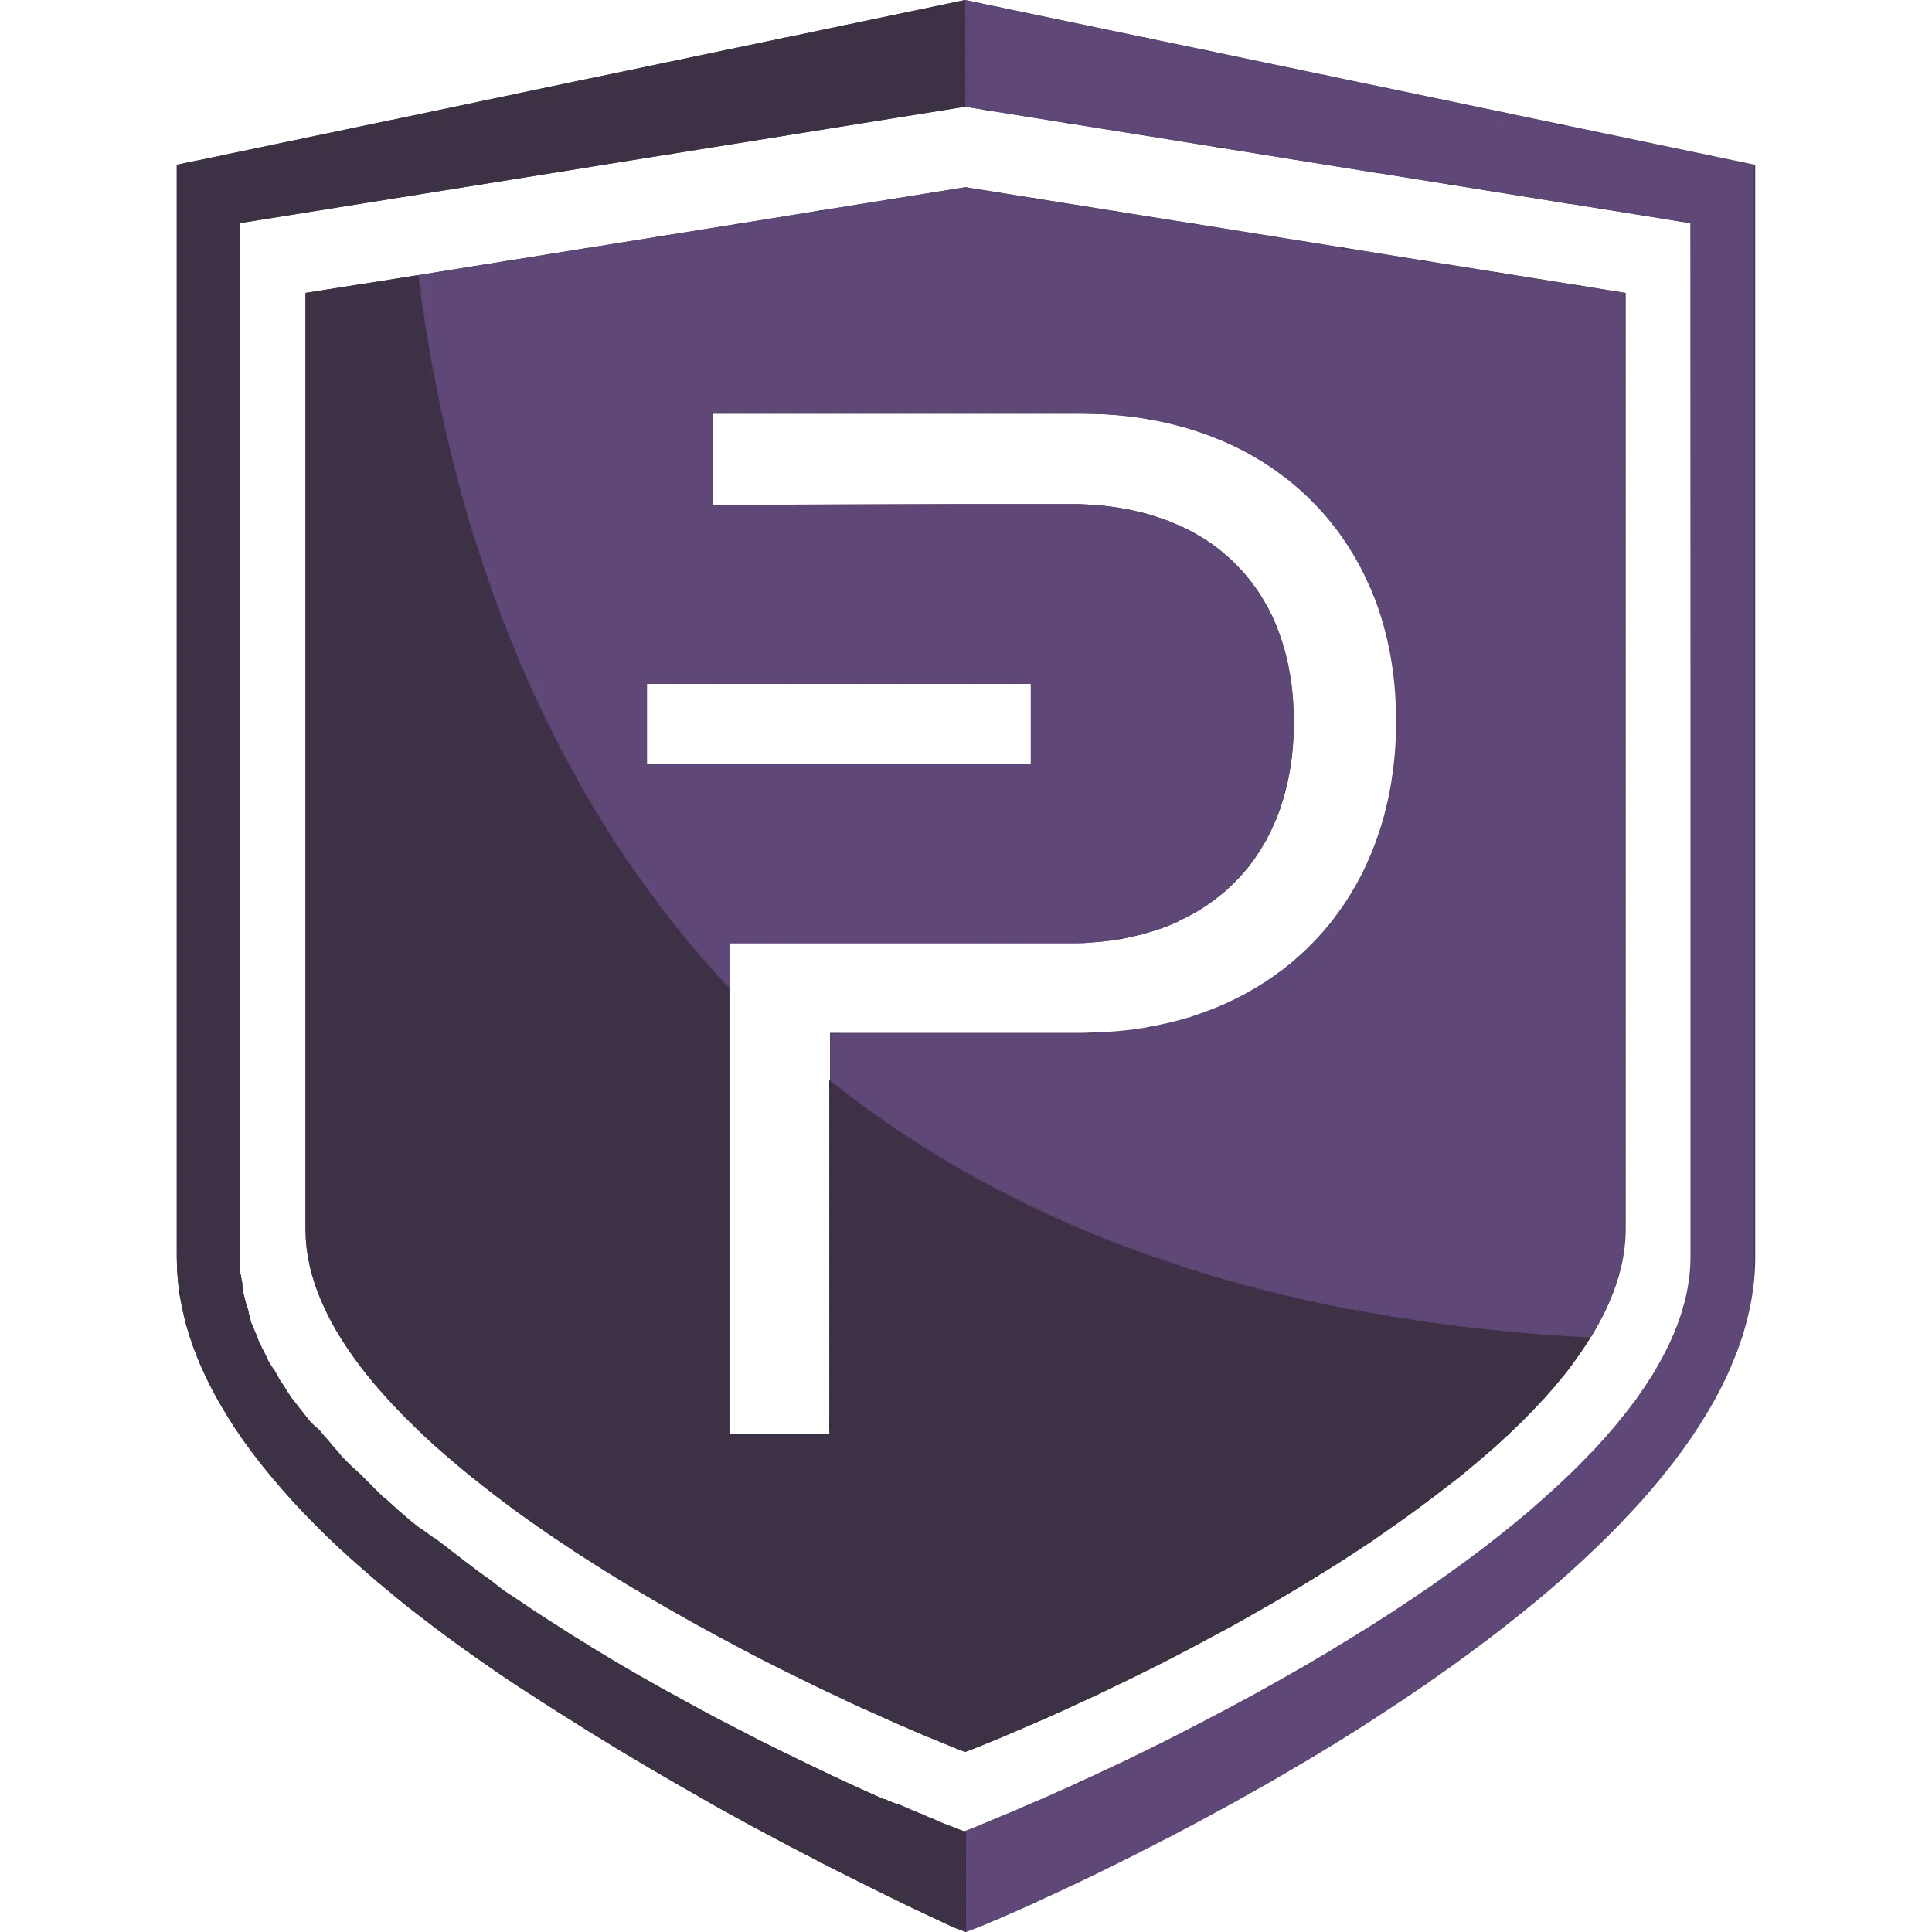 PIVX logo in svg format